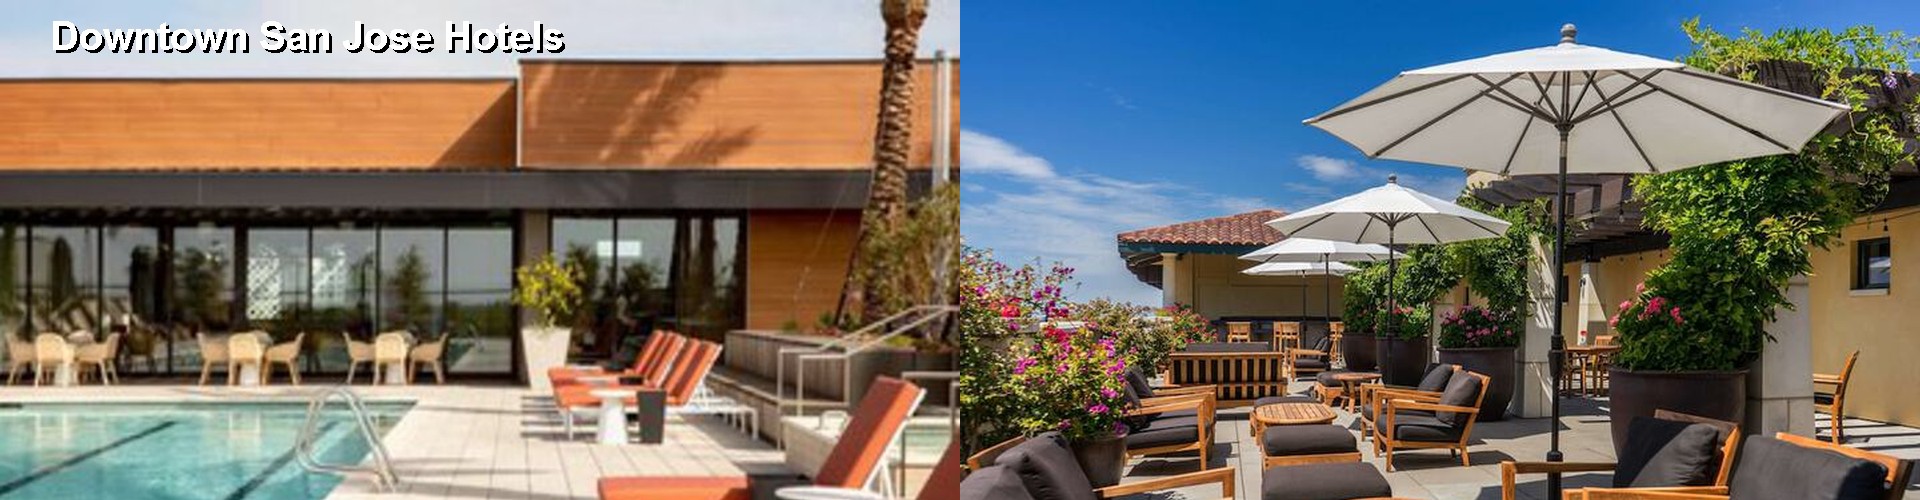 3 Best Hotels near Downtown San Jose